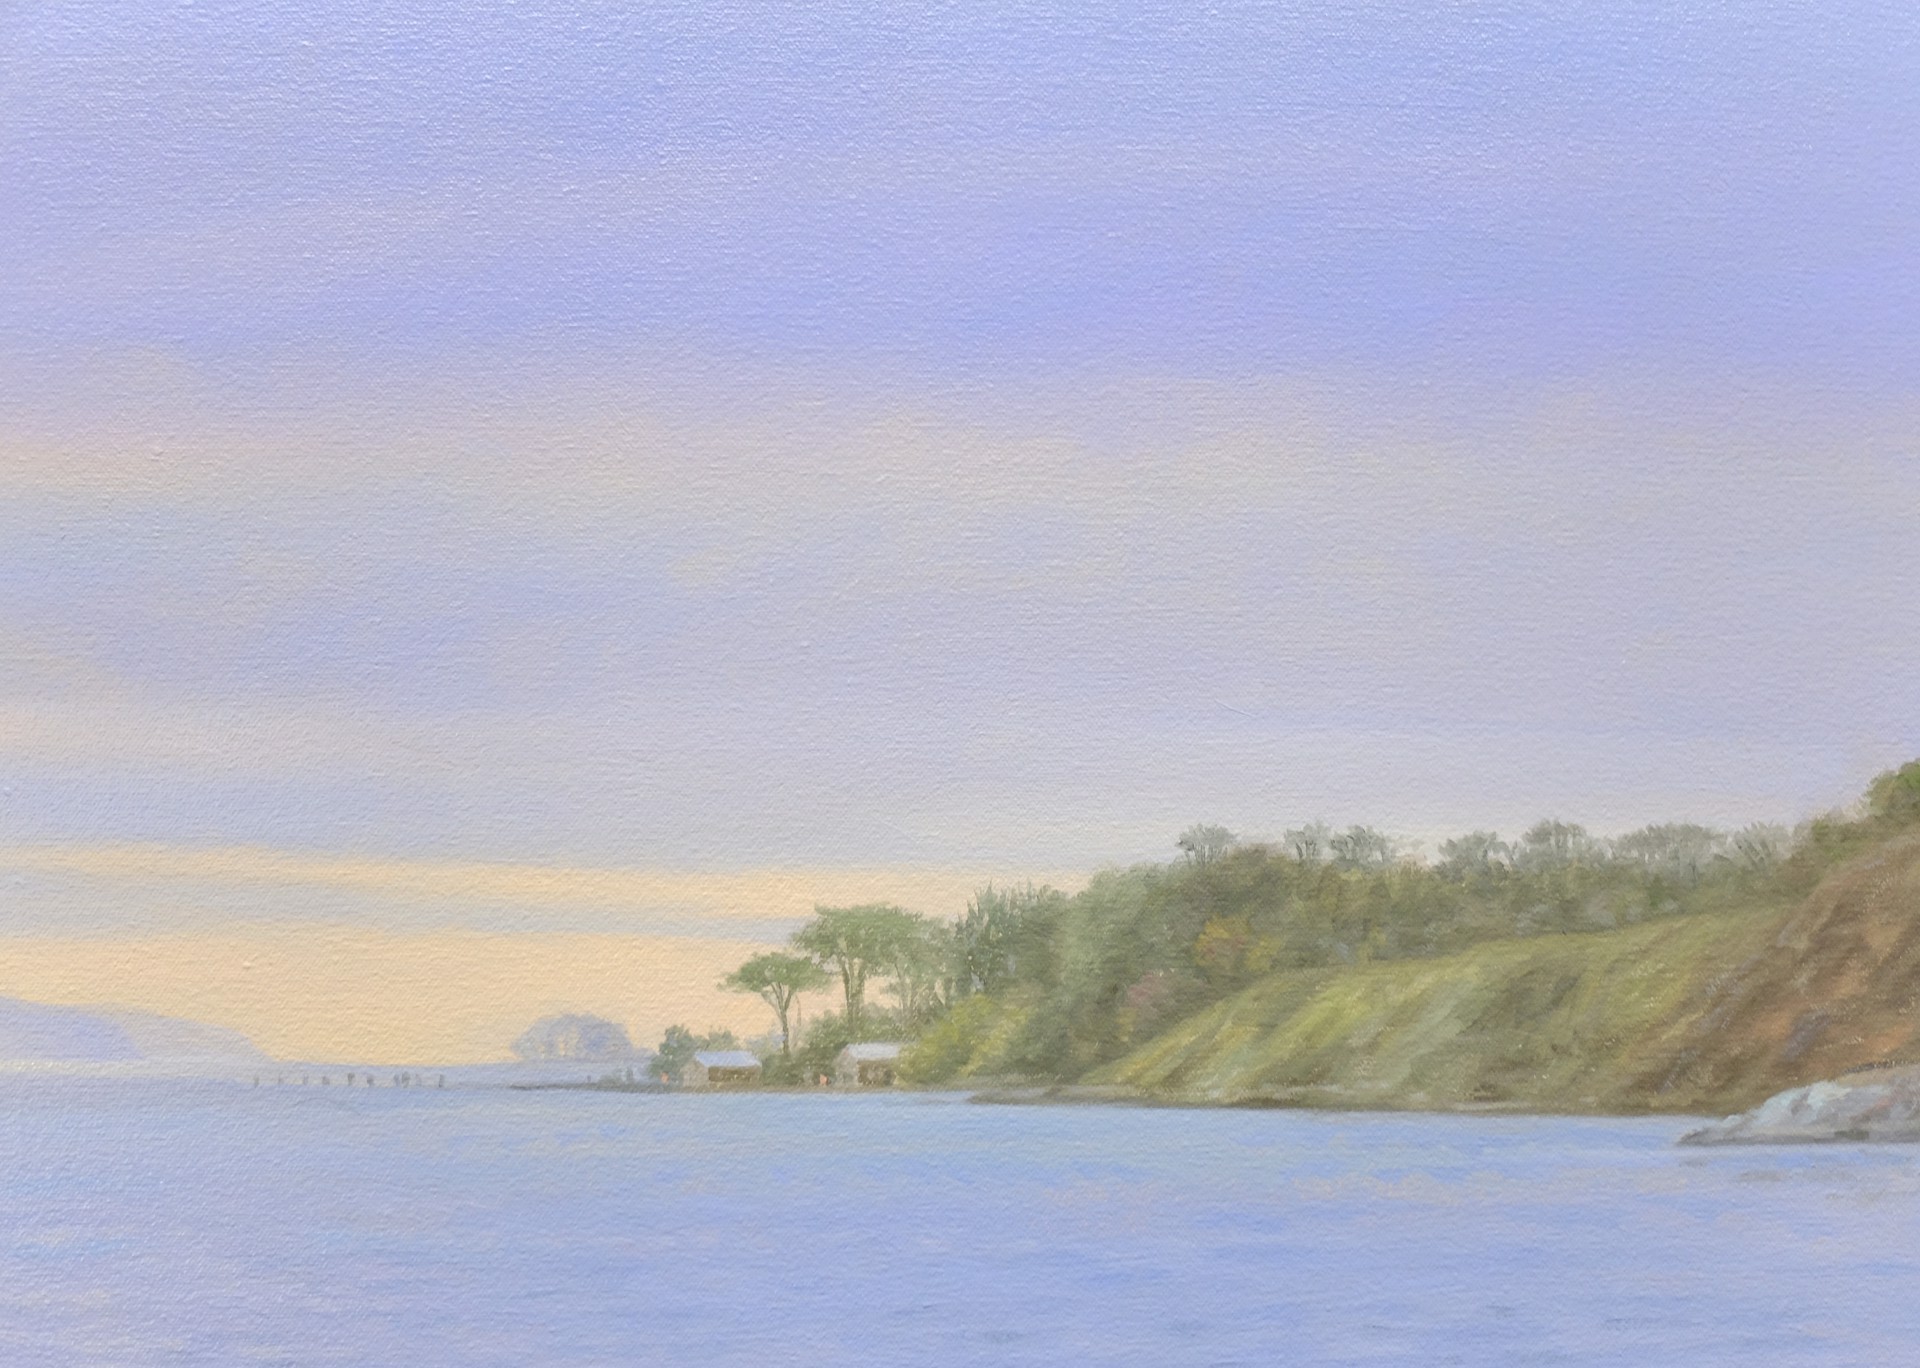 Tomales Bay Evening by Willard Dixon